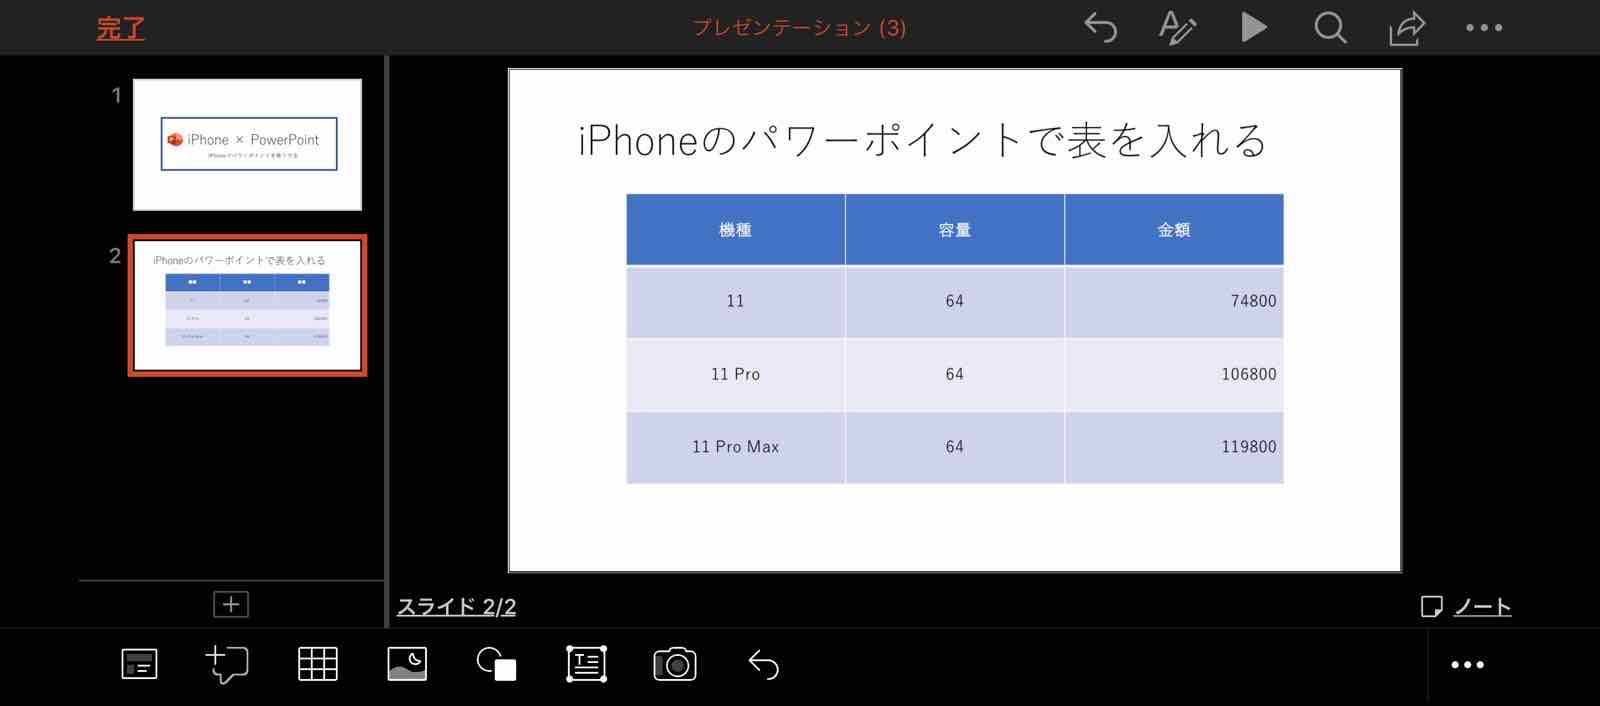 Iphone Powerpoint アイフォンでパワーポイントを使う方法 Kunyotsu Log